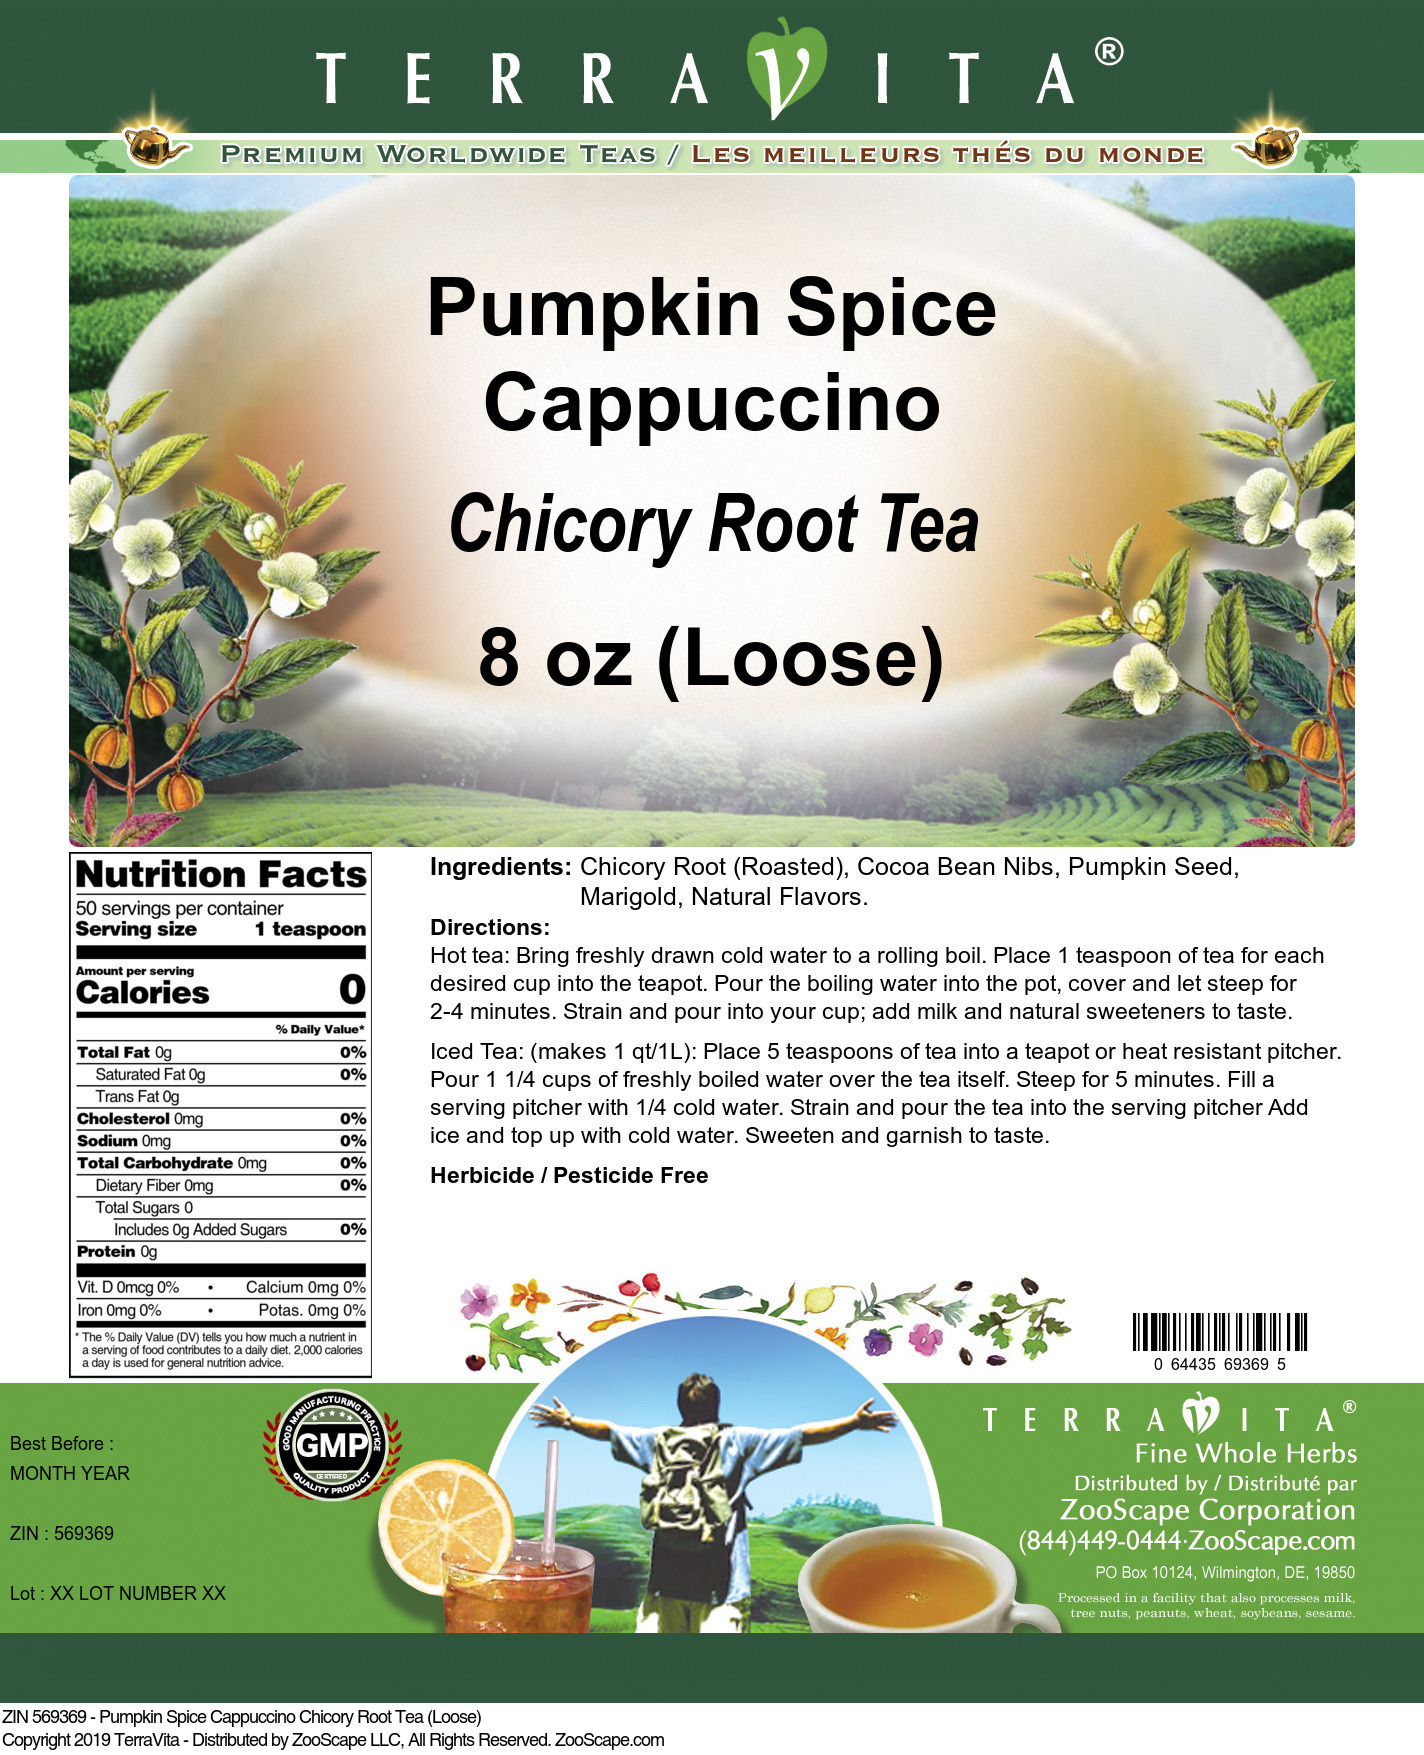 Pumpkin Spice Cappuccino Chicory Root Tea (Loose) - Label